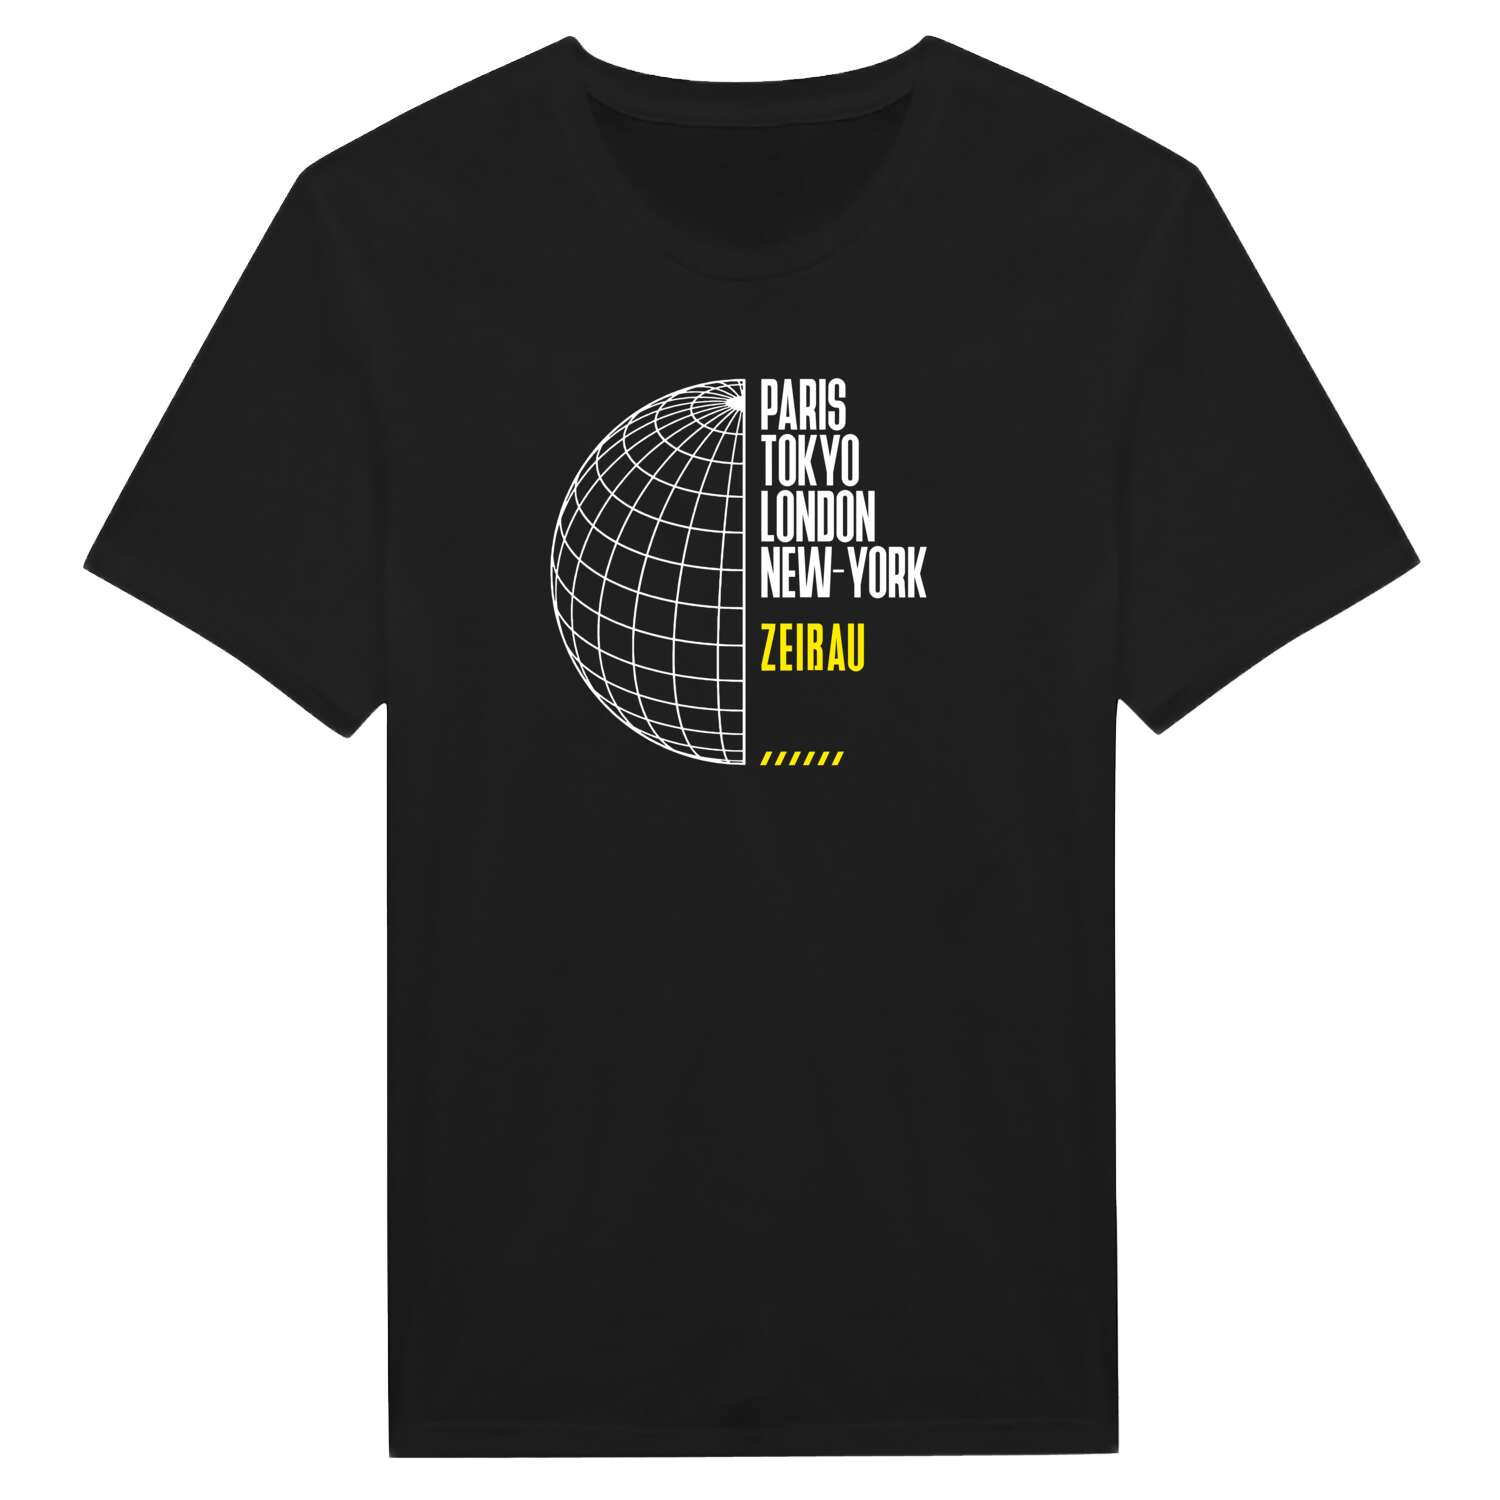 Zeißau T-Shirt »Paris Tokyo London«